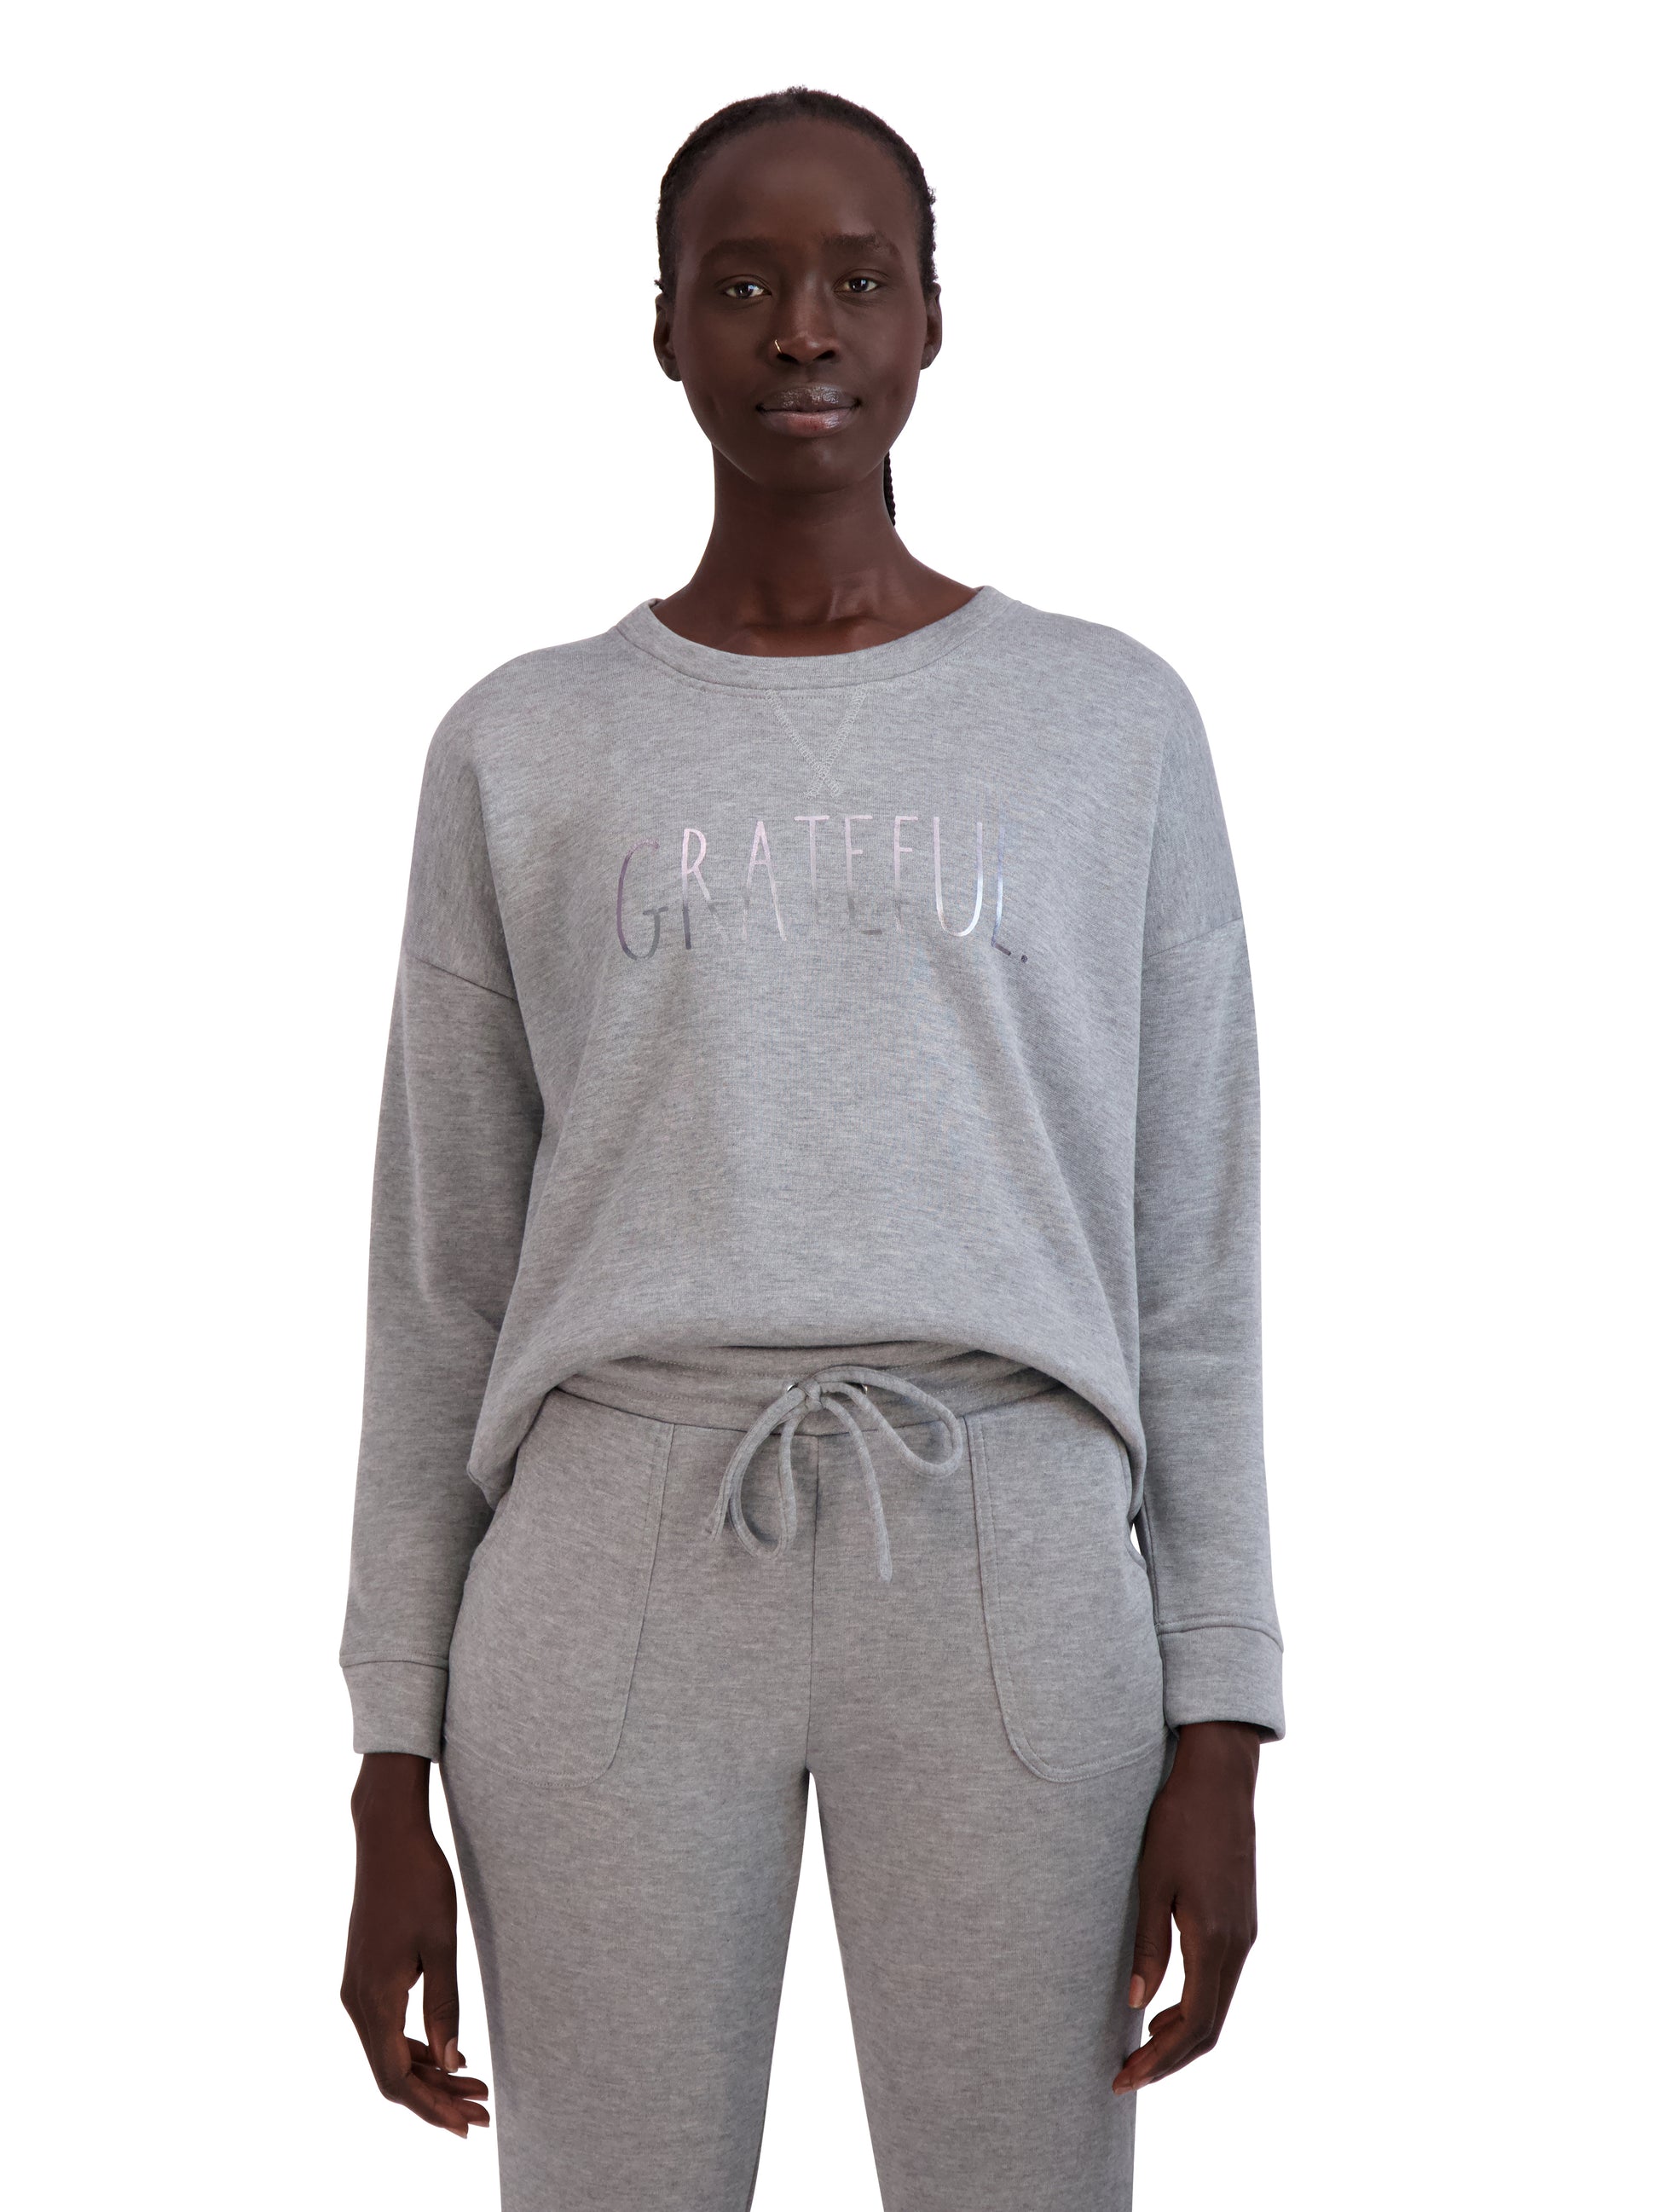 Rae Dunn Women's GRATEFUL Pullover Sweatshirt and Drawstring Sweatpants  Lounge Set – Rae Dunn Wear